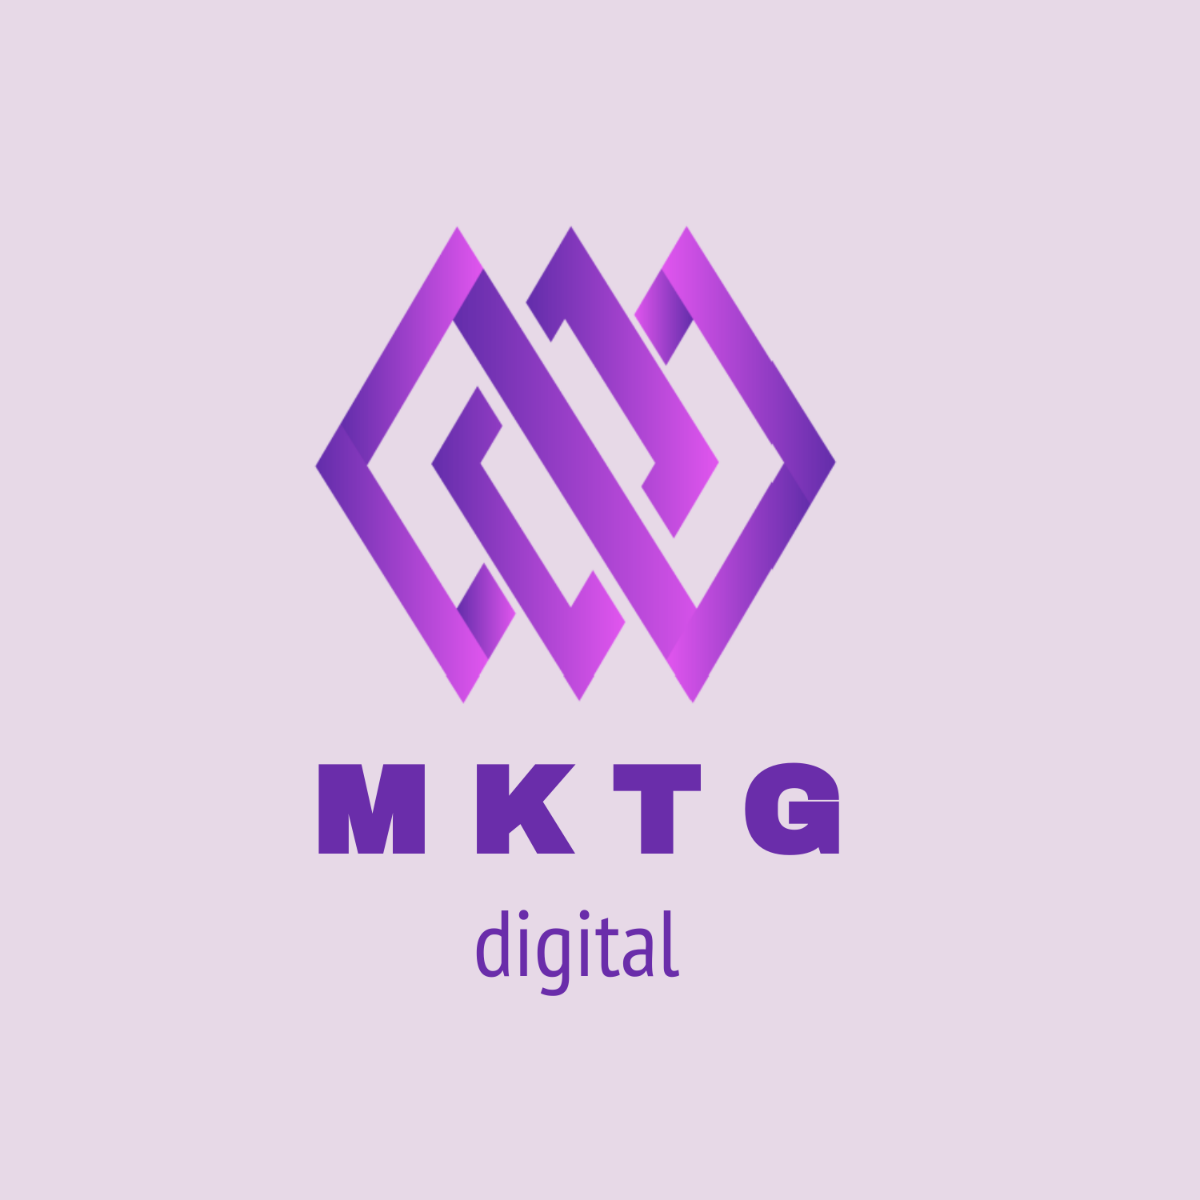 Digital Marketing Agency Campaign Logo